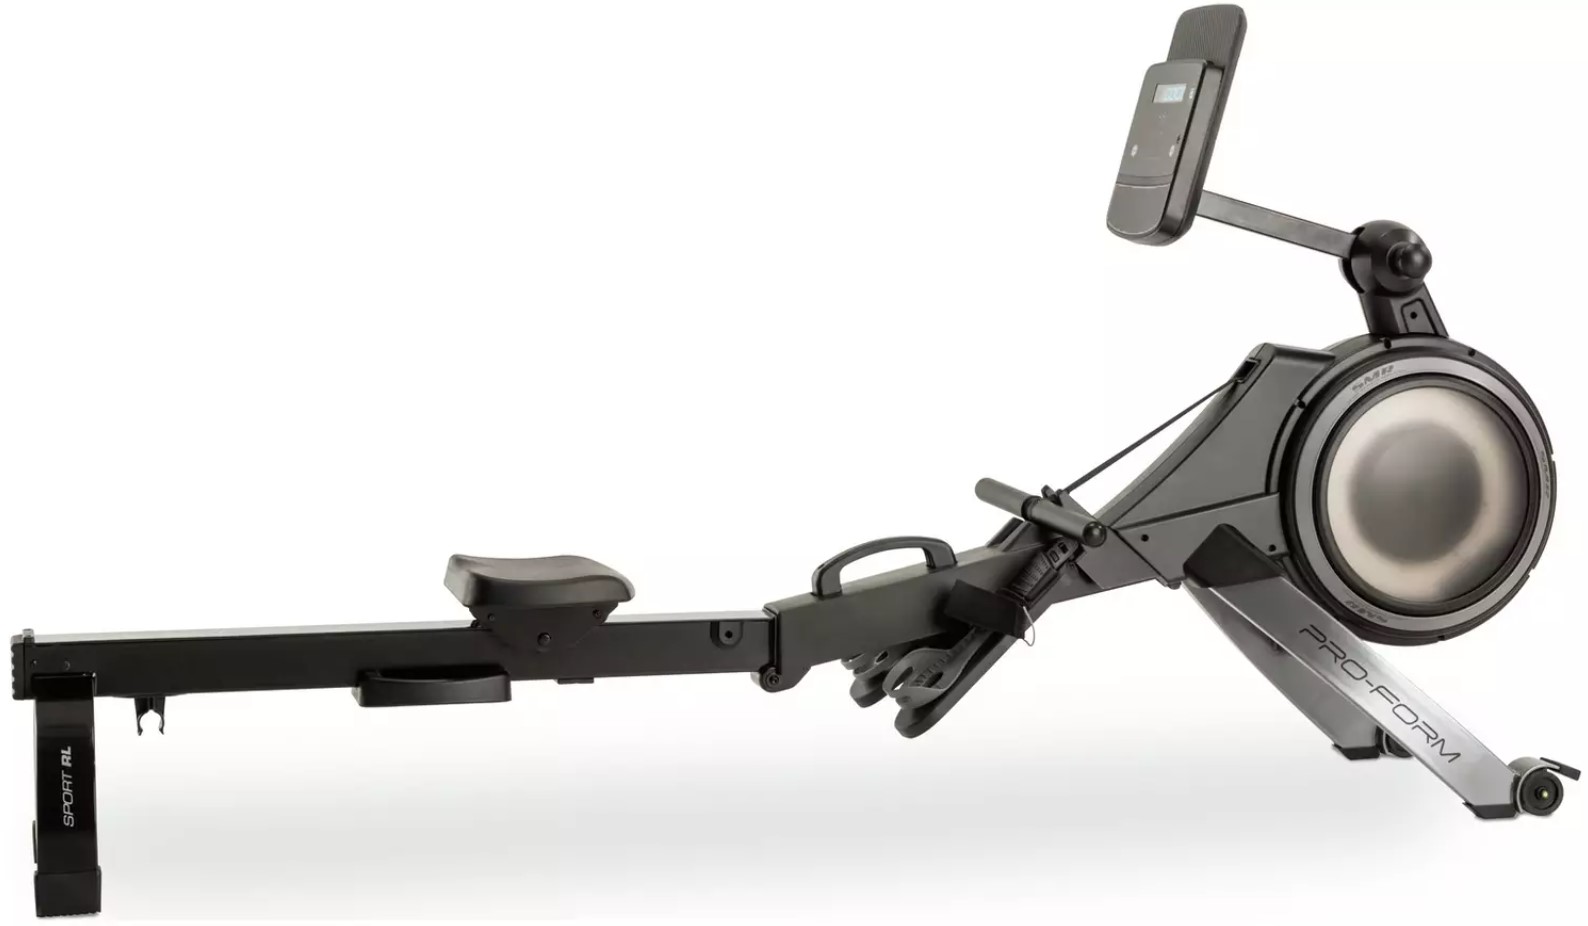 Product shot of ProForm rowing machine